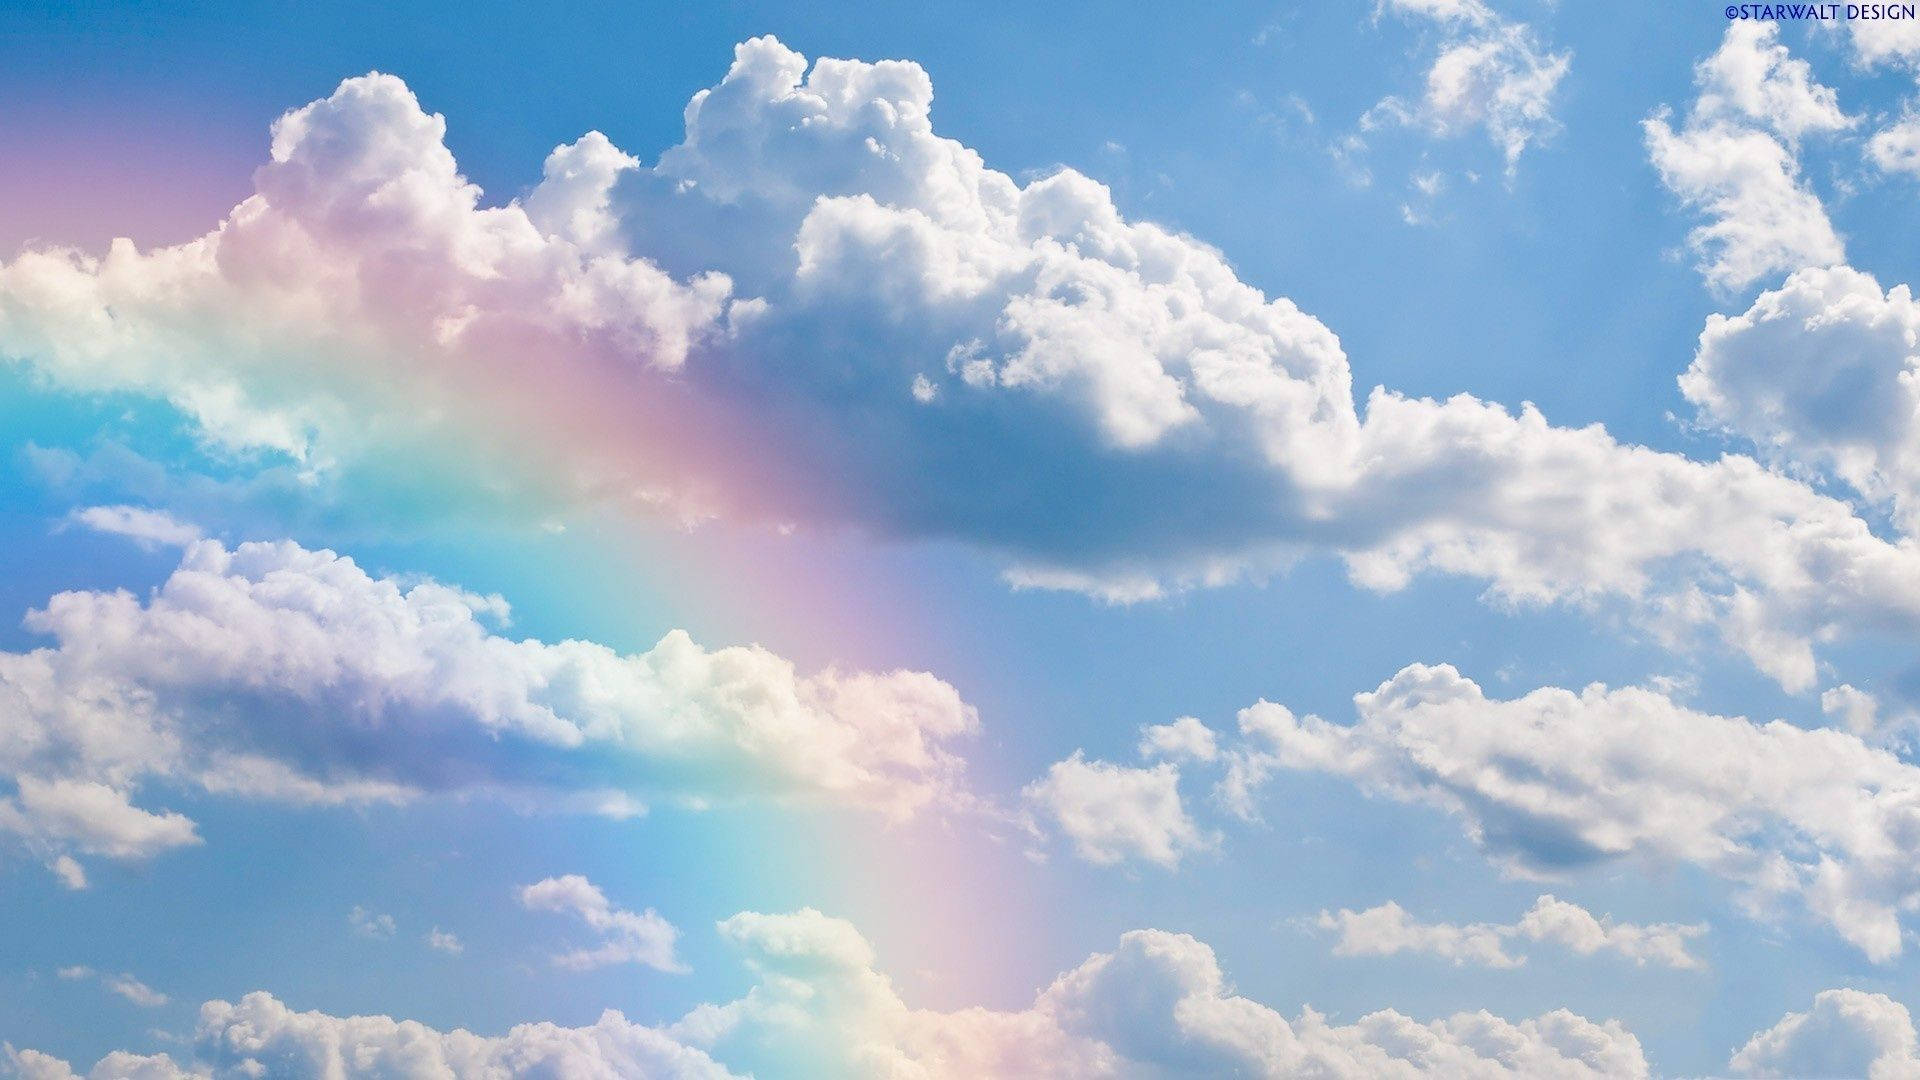 Aesthetic Cloud With A Rainbow